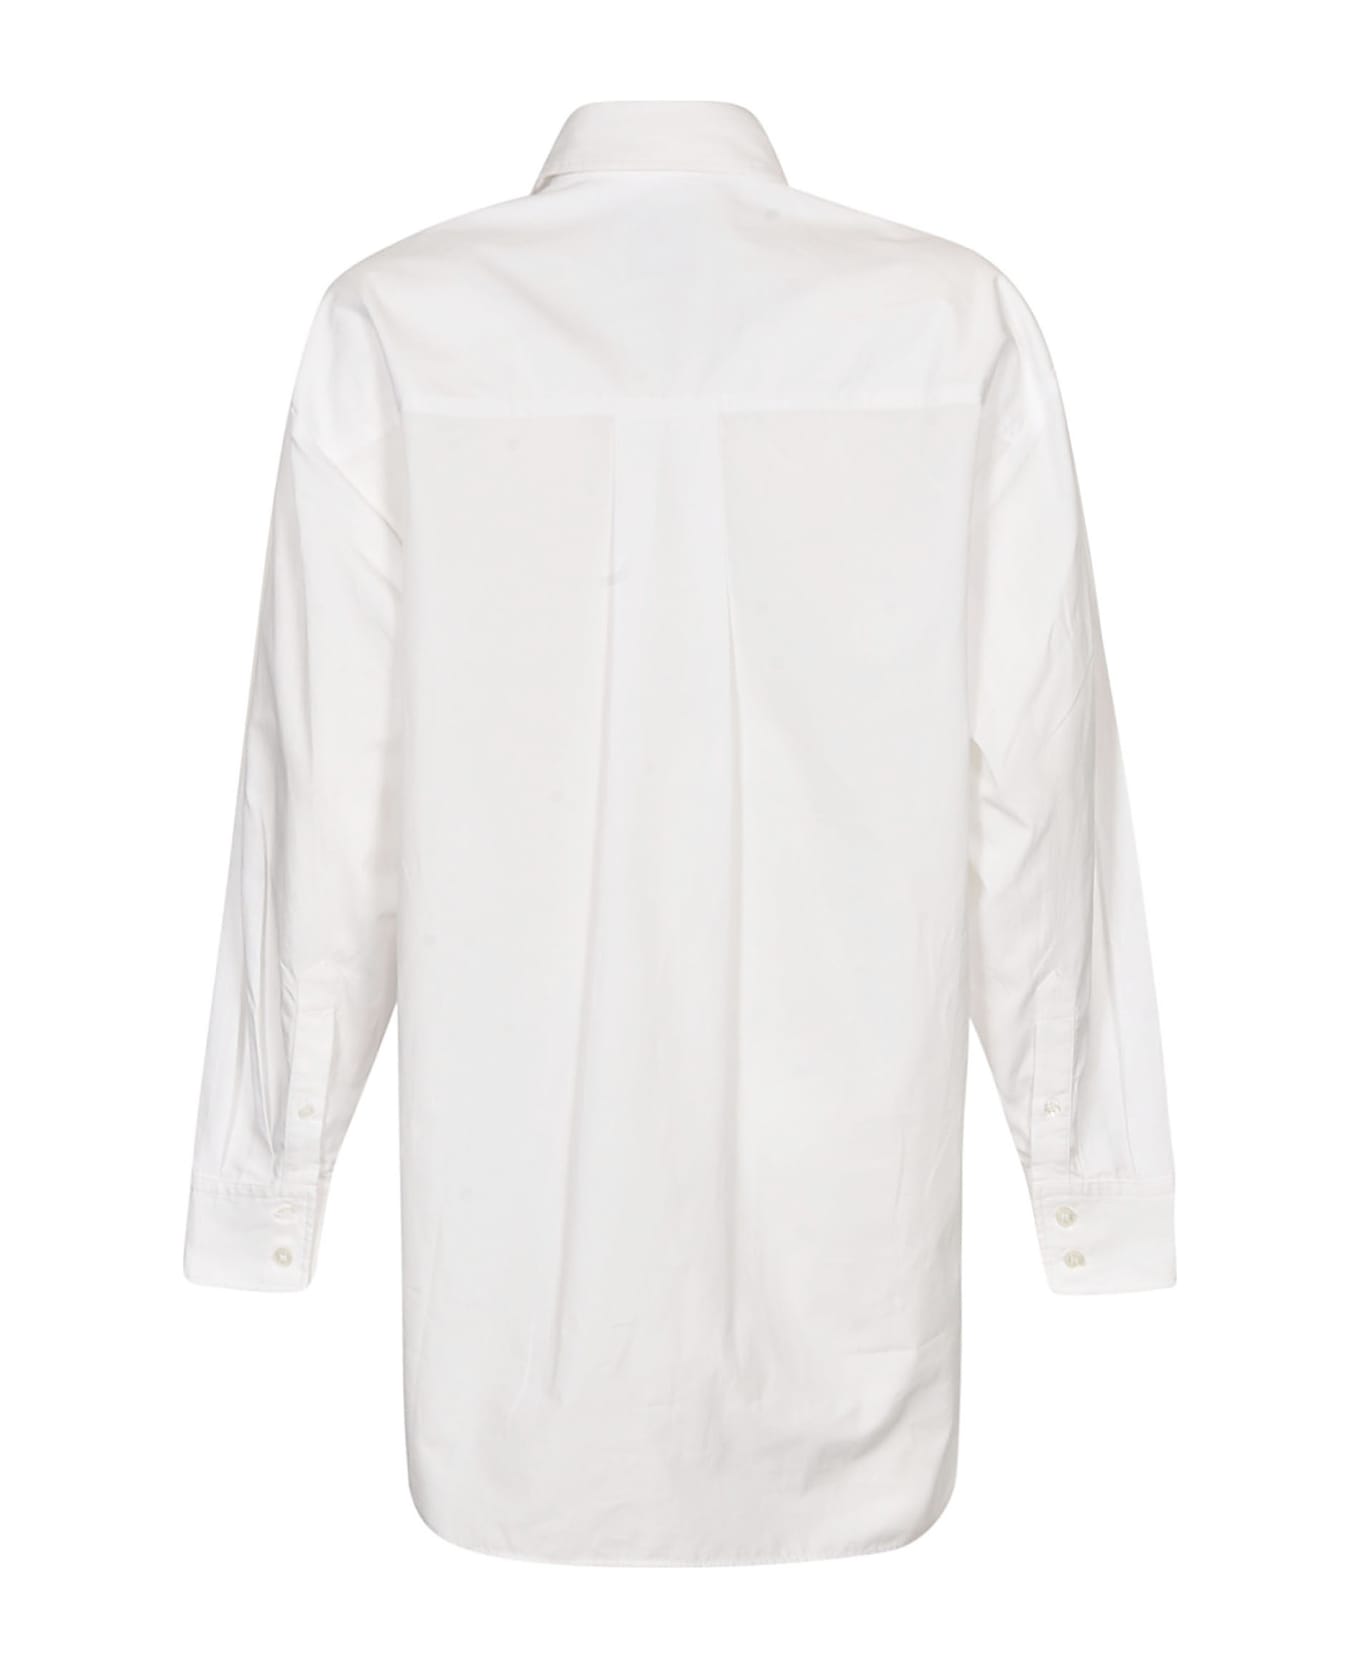 Isabel Marant Cylvany Shirt - White シャツ